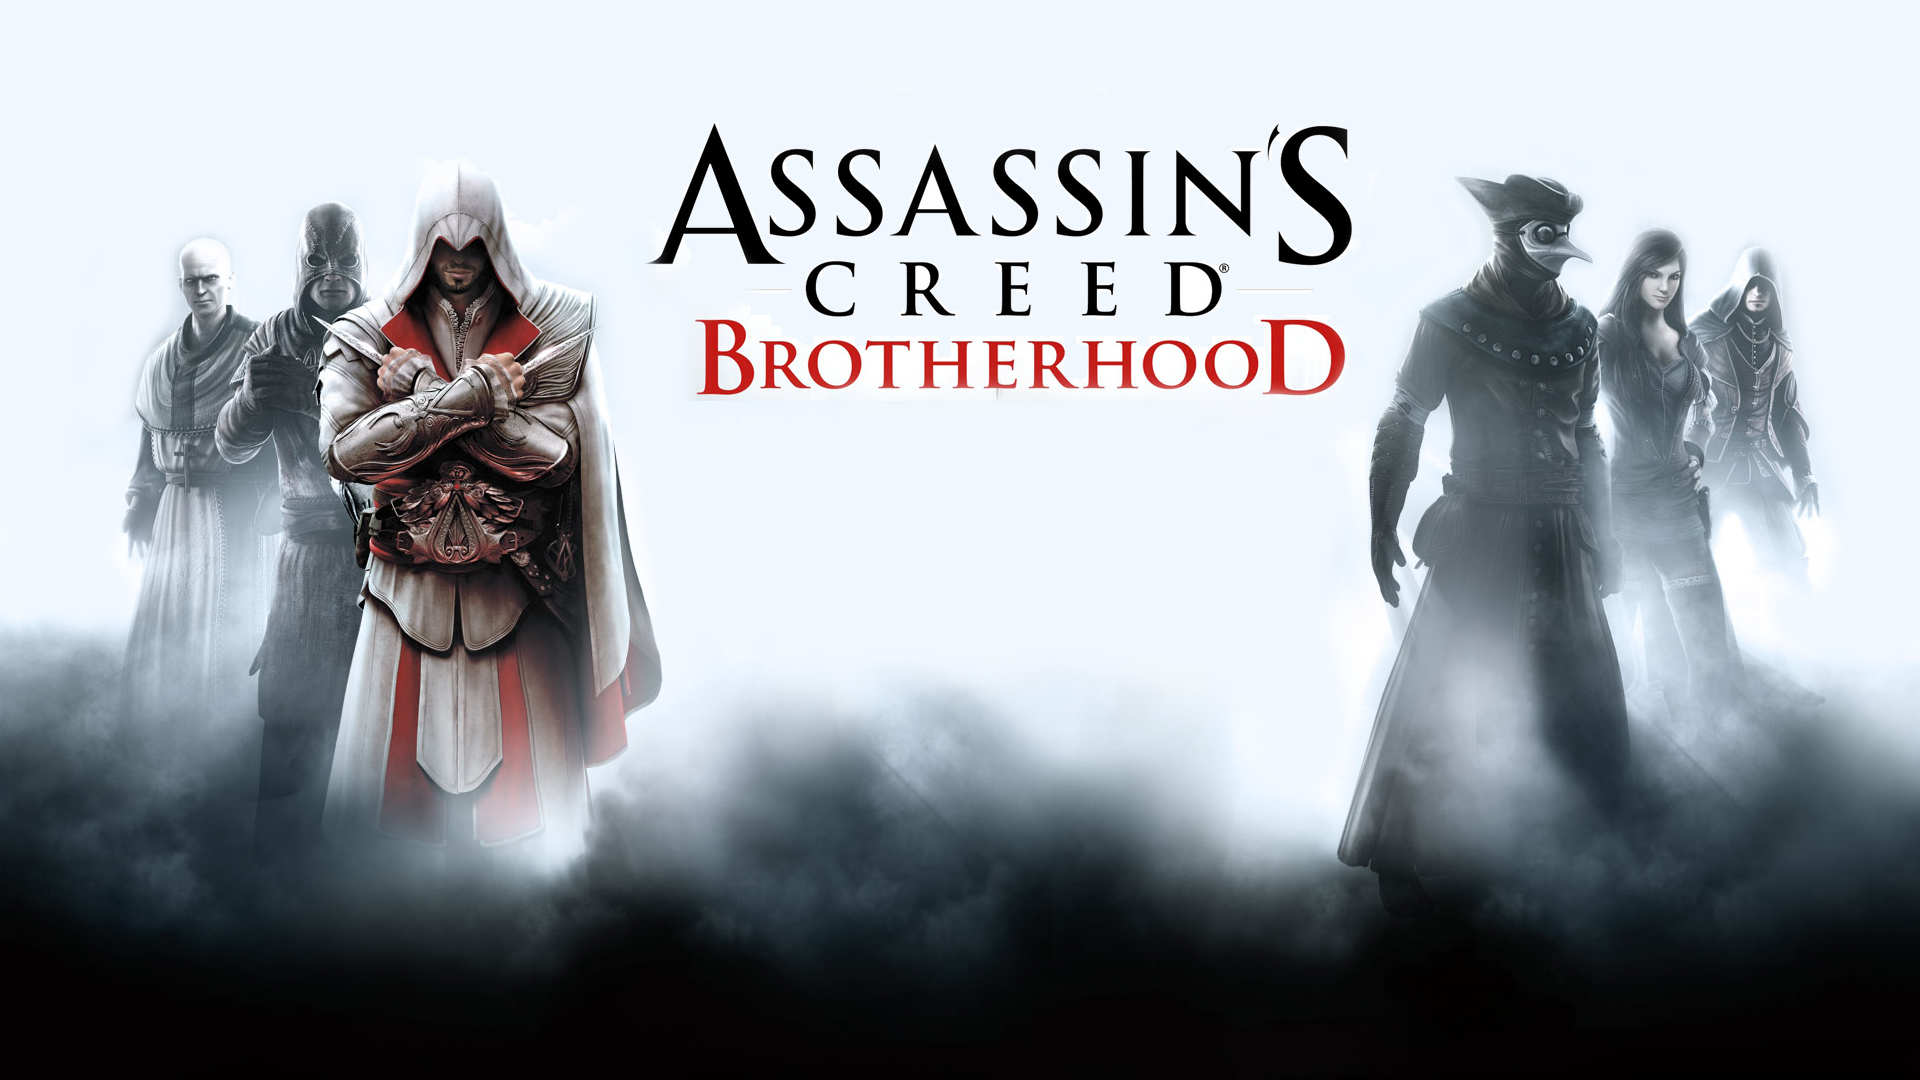 Brotherhood. Ассасин Крид 2 братство крови обложка. Assassin's Creed Brotherhood геймплей. Обои ассасин братство крови. Assassin's Creed братство крови обложка.